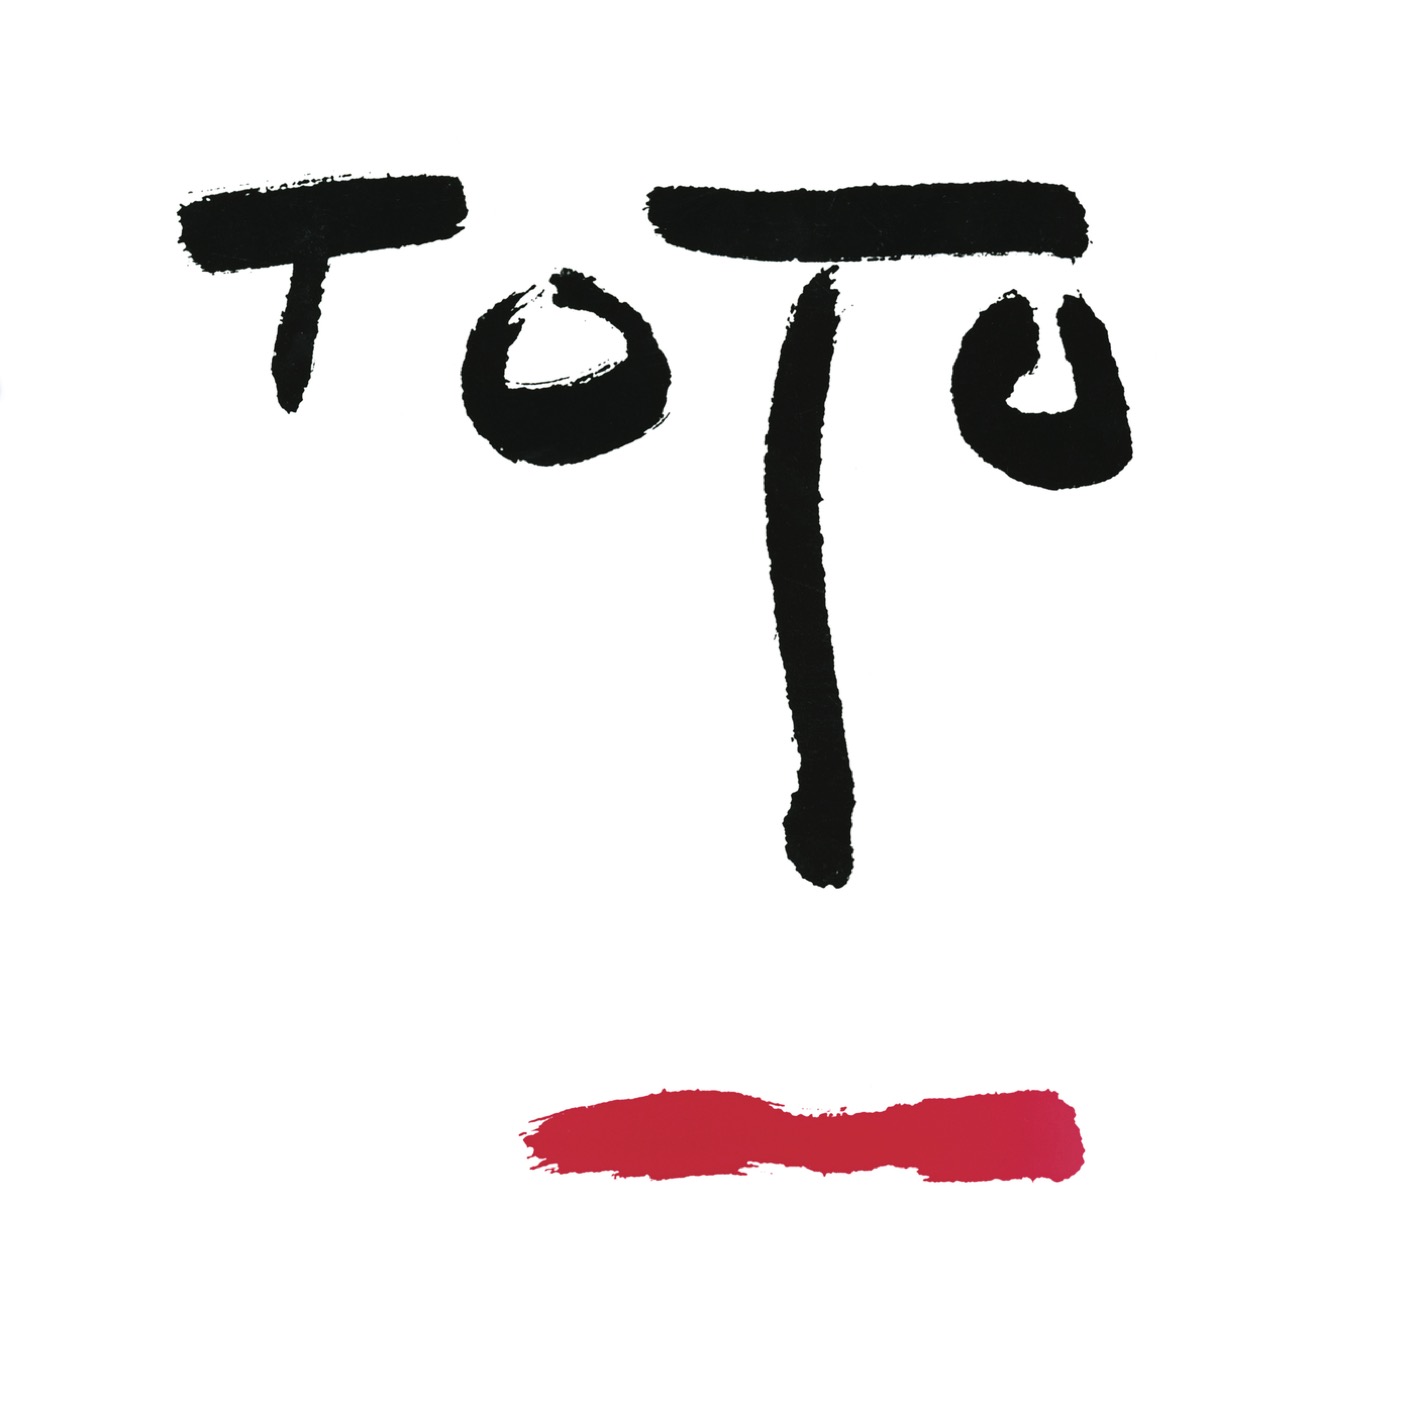 Toto - Turn Back (Remastered) (1979/2020) [FLAC 24bit/192kHz]